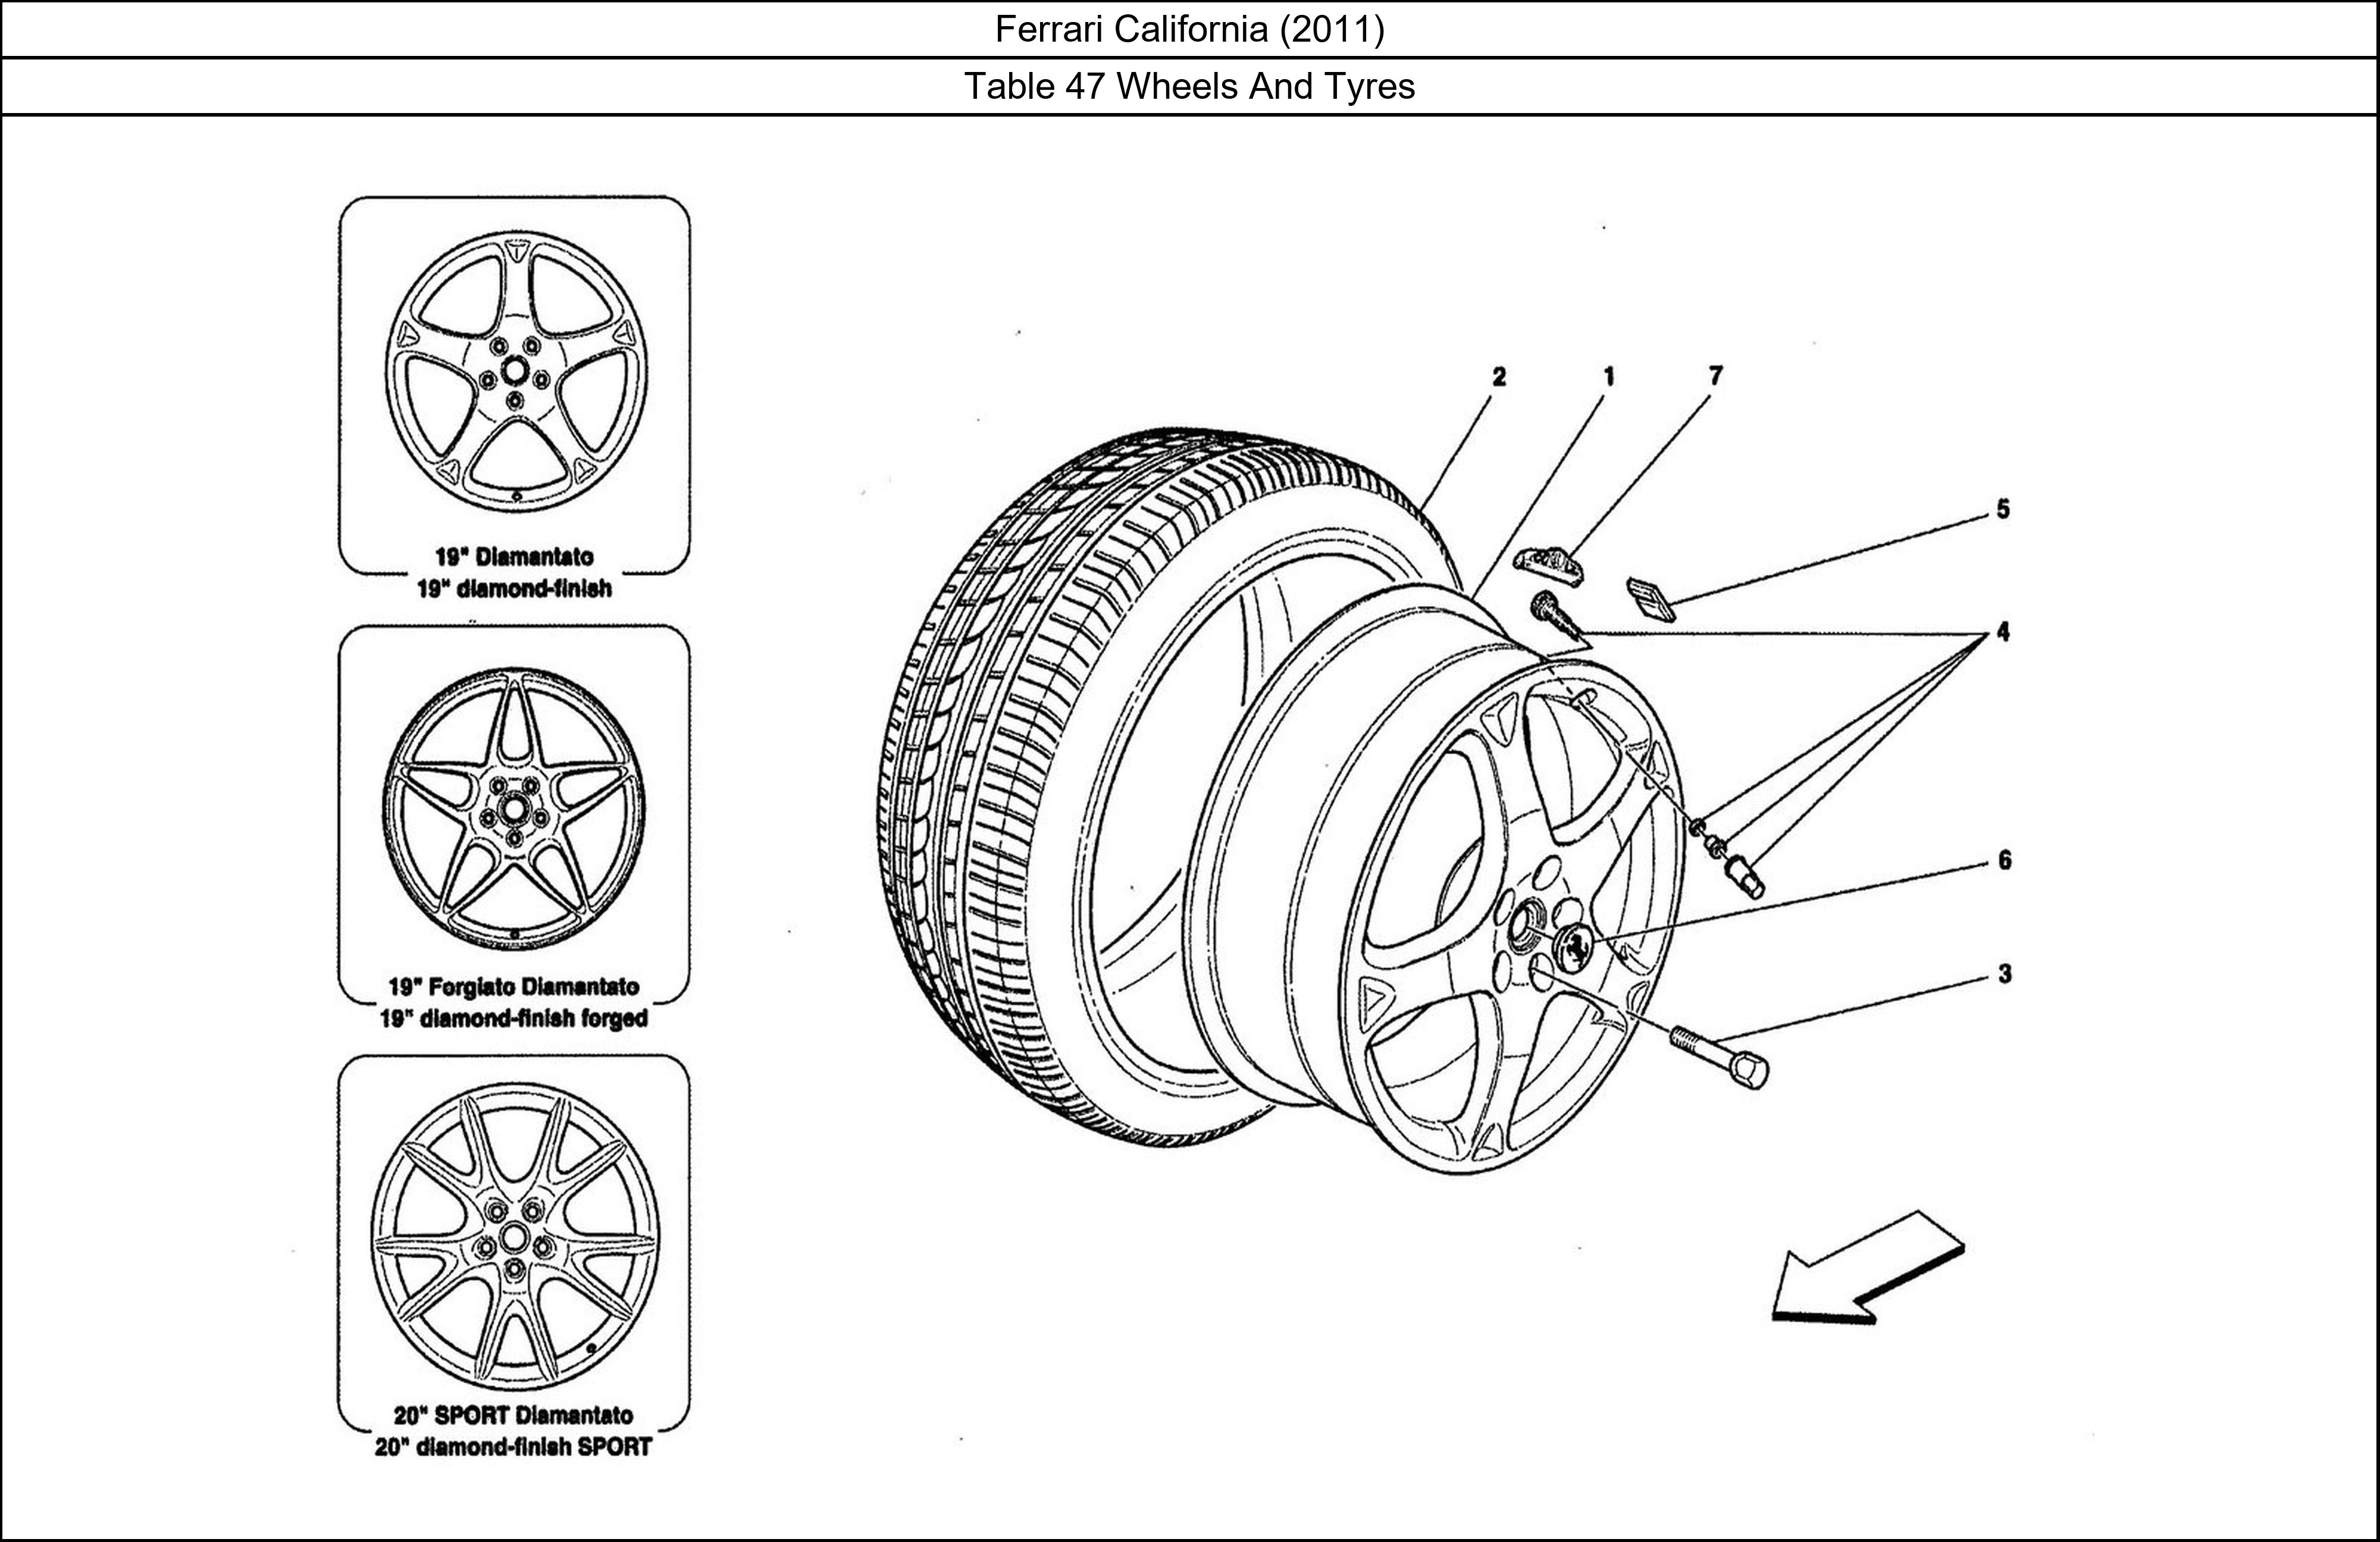 Ferrari Parts Ferrari California (2011) Table 47 Wheels And Tyres